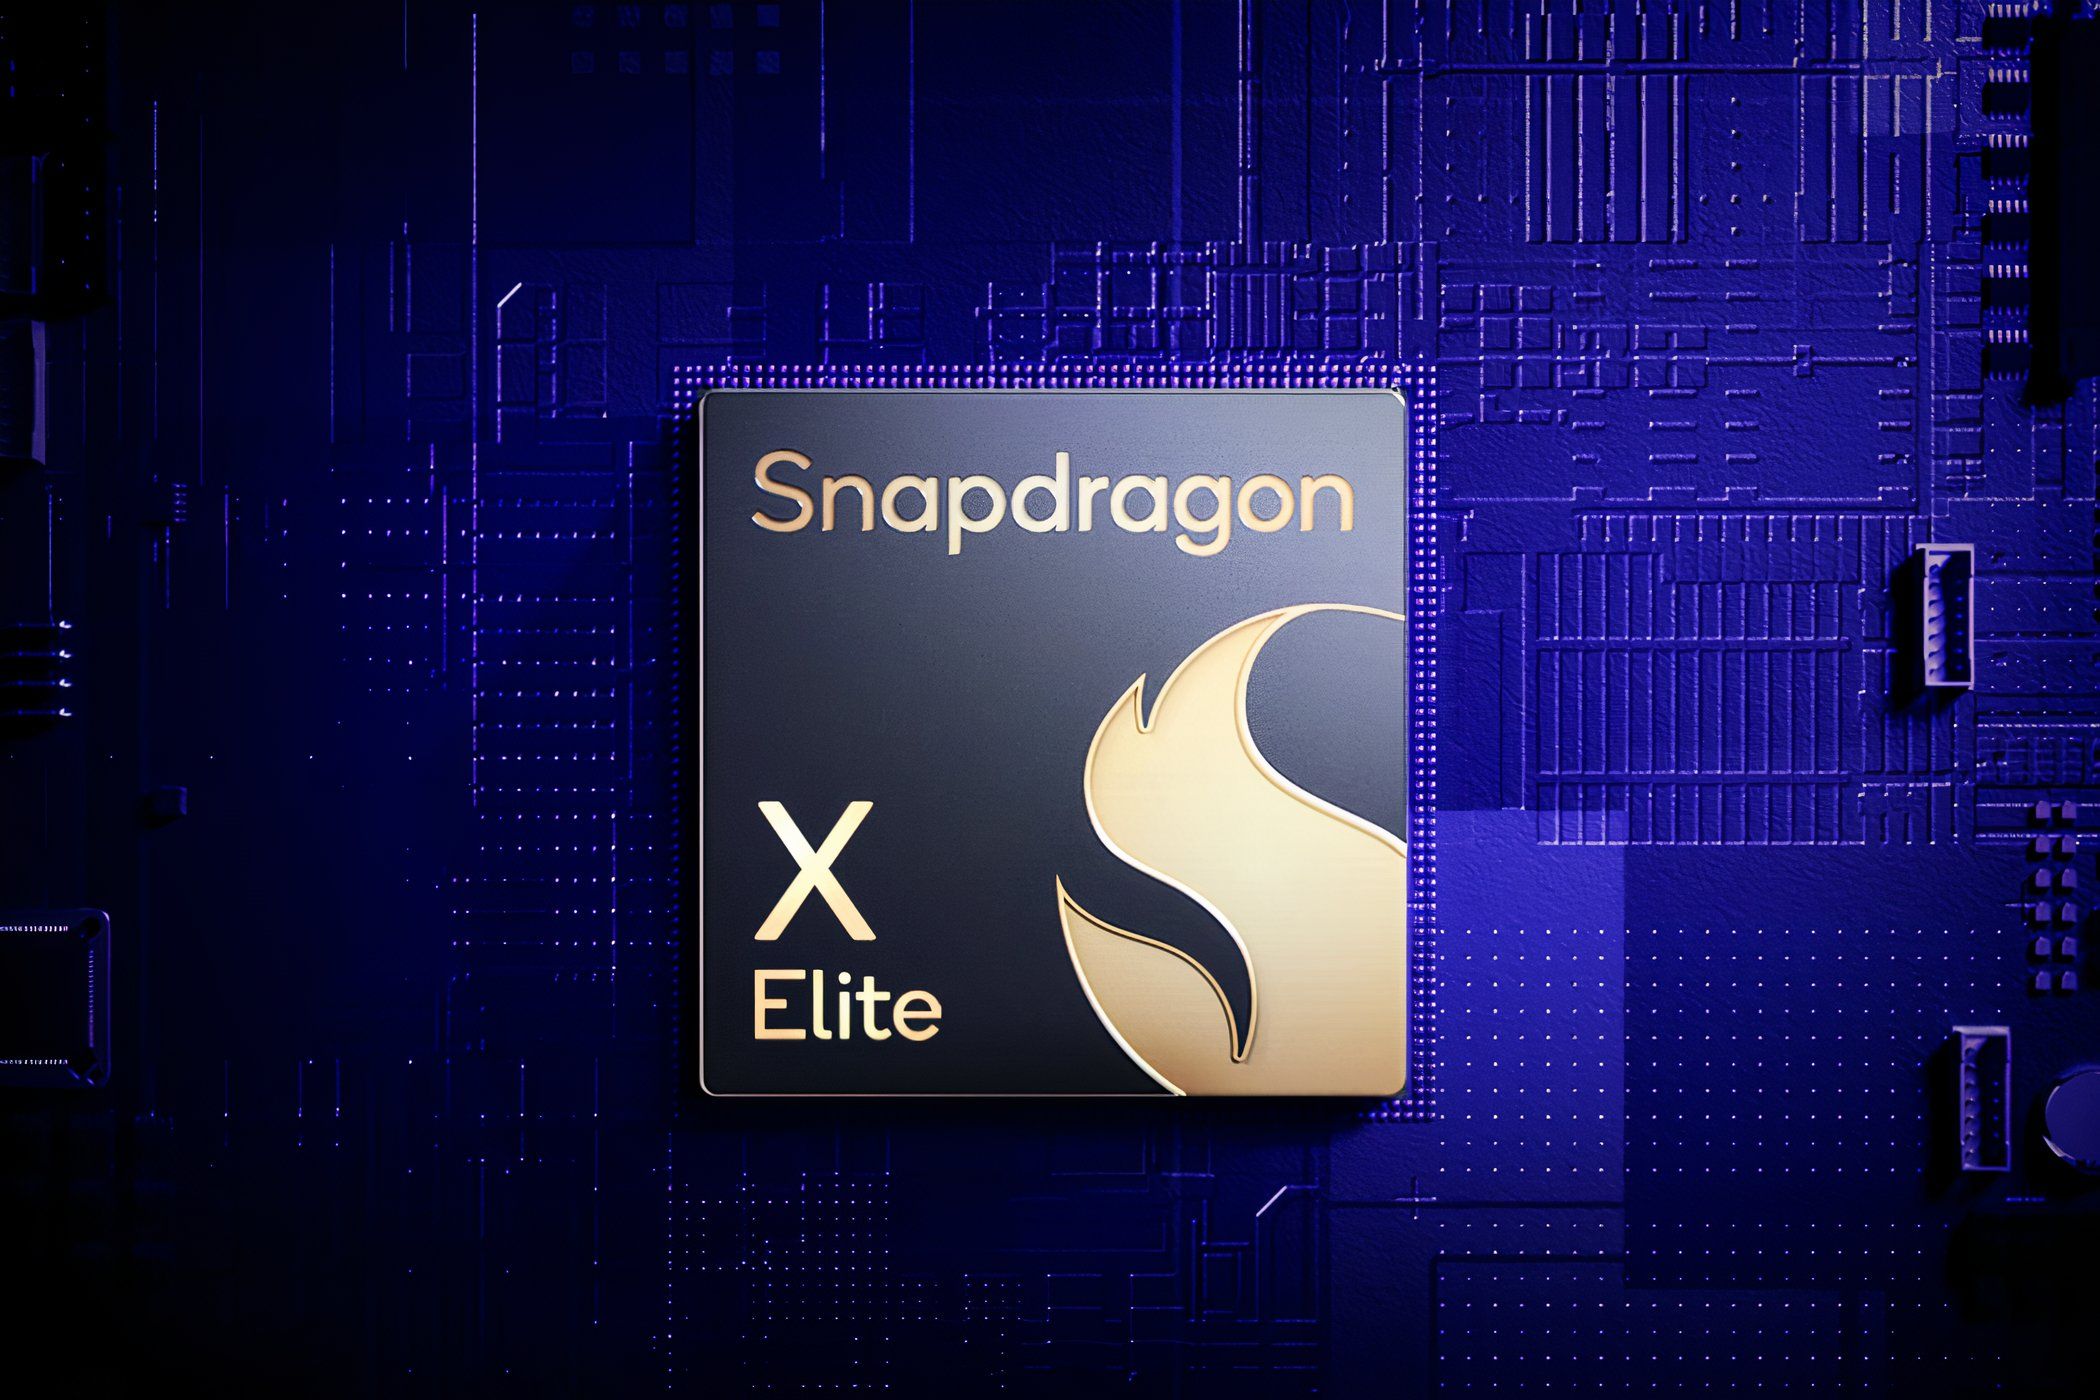 snapdragon x elite processor on purple background